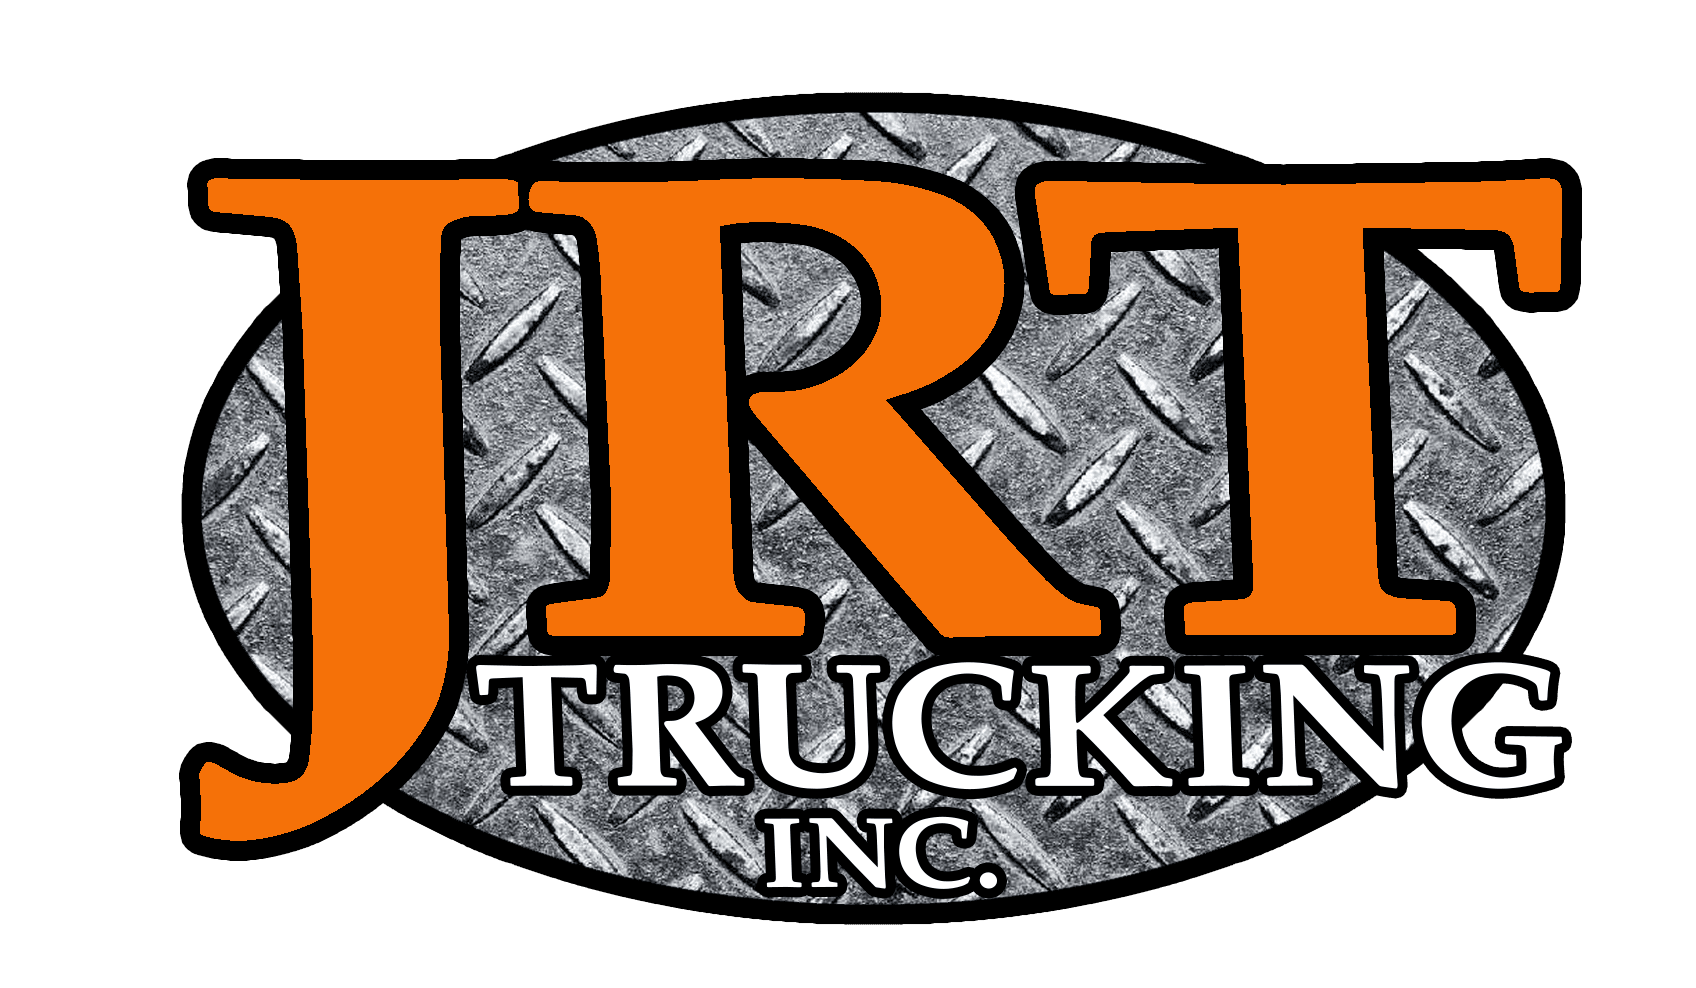 JRT Trucking Inc